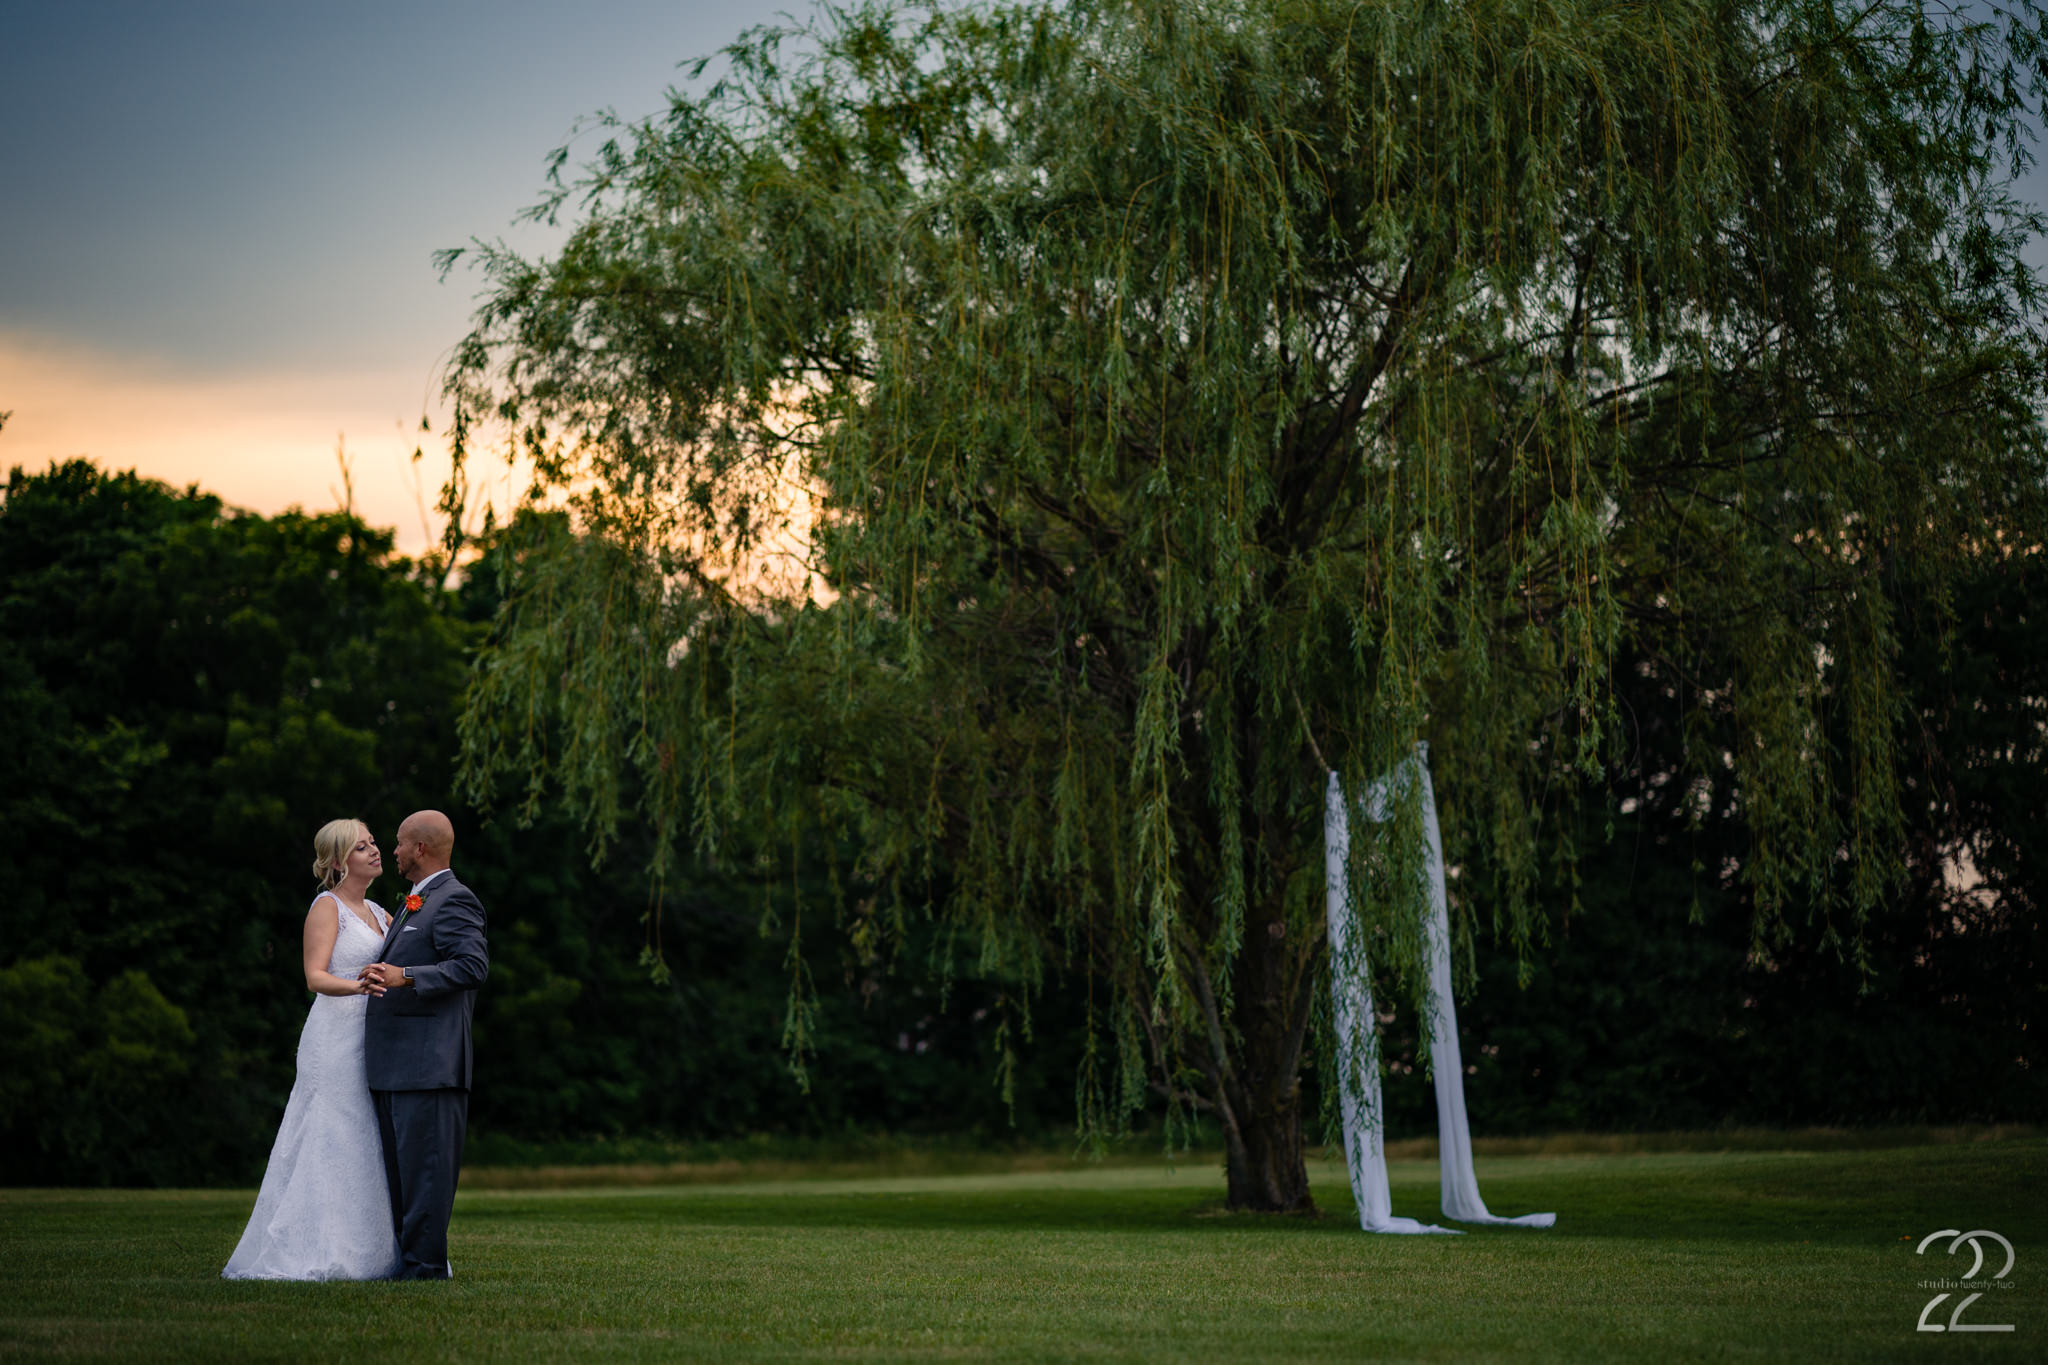 Weddings under a Willow Tree - Dayton Wedding Photos